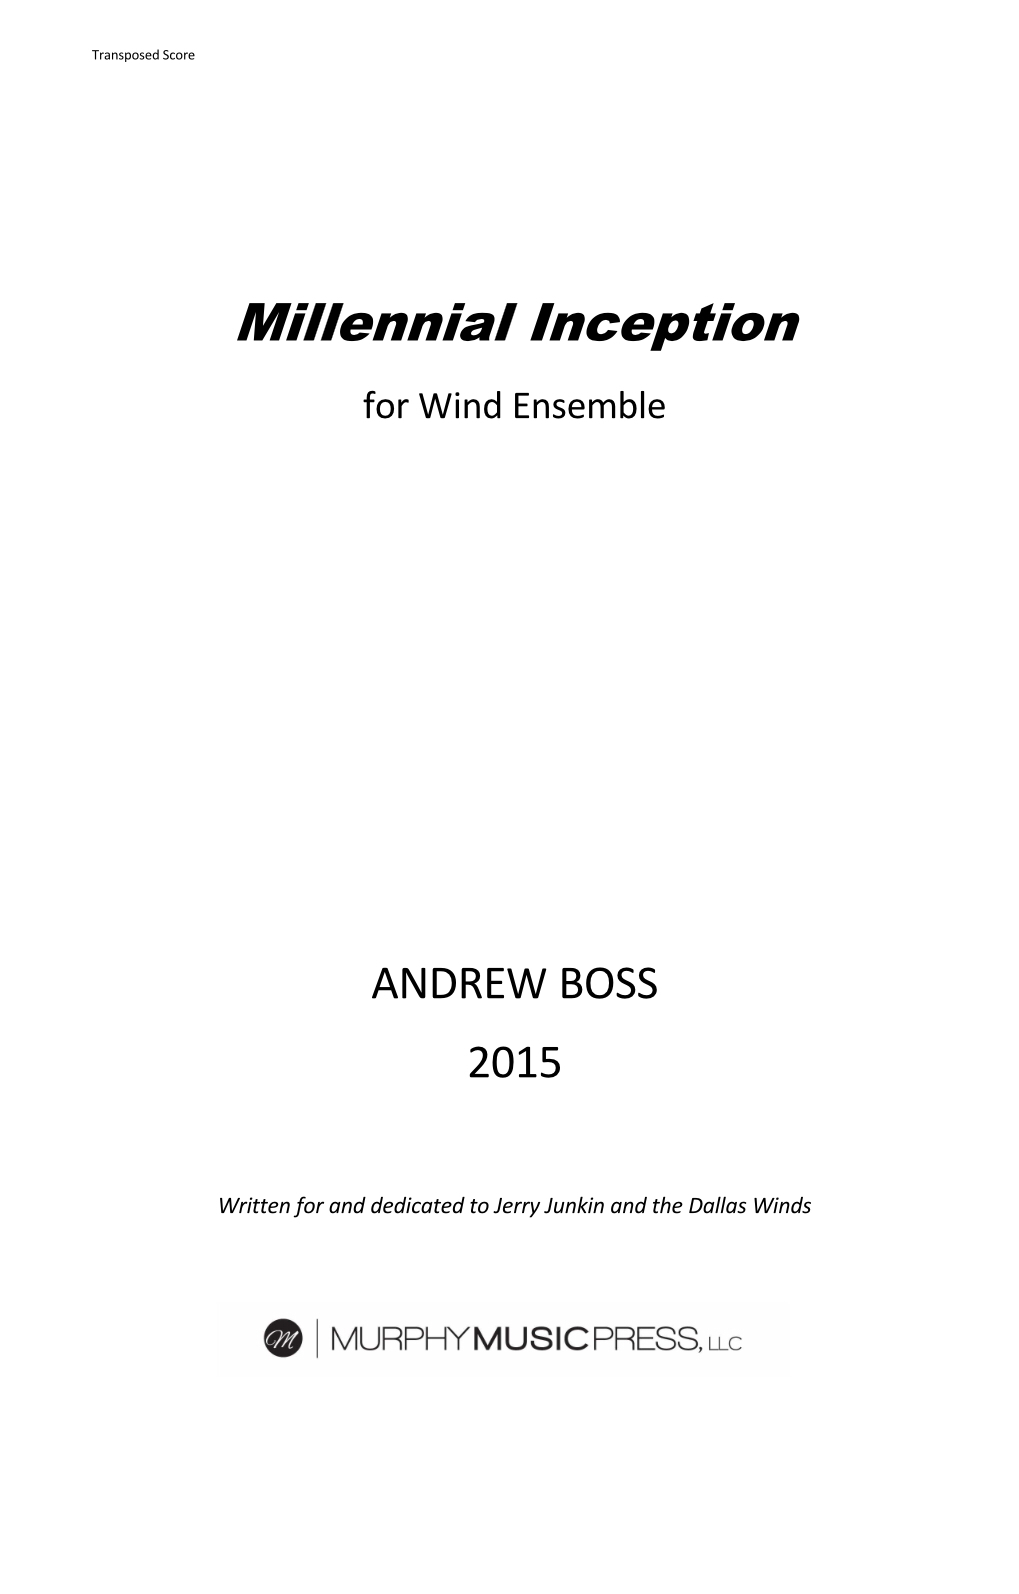 Millennial Inception (standard Instrumentation) by Andrew Boss